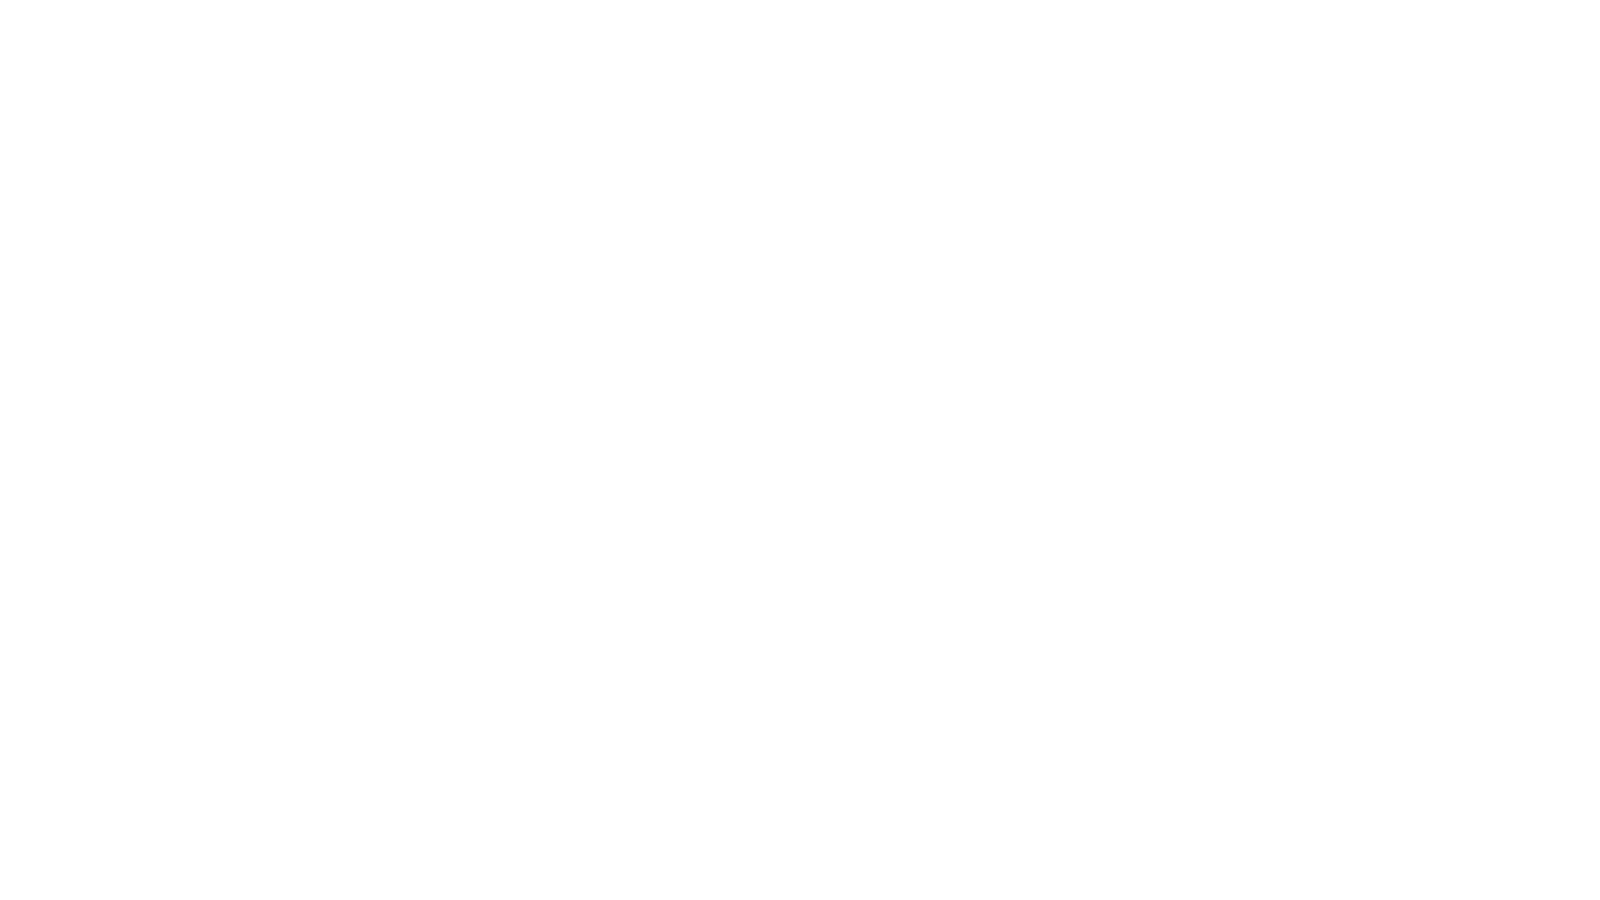 Spontane Menschen-Videoaufnahme in Graz, Österreich. Experimentelles Filmen bei schlechten Lichtverhältnissen mit einer selbst entwickelten Aufnahmemethode.
Спонтанная съёмка людей экшн-камерой при дневном свете и в условиях низкой (искусственной) освещённости при помощи метода проб и ошибок и бескорыстном творческом усердии